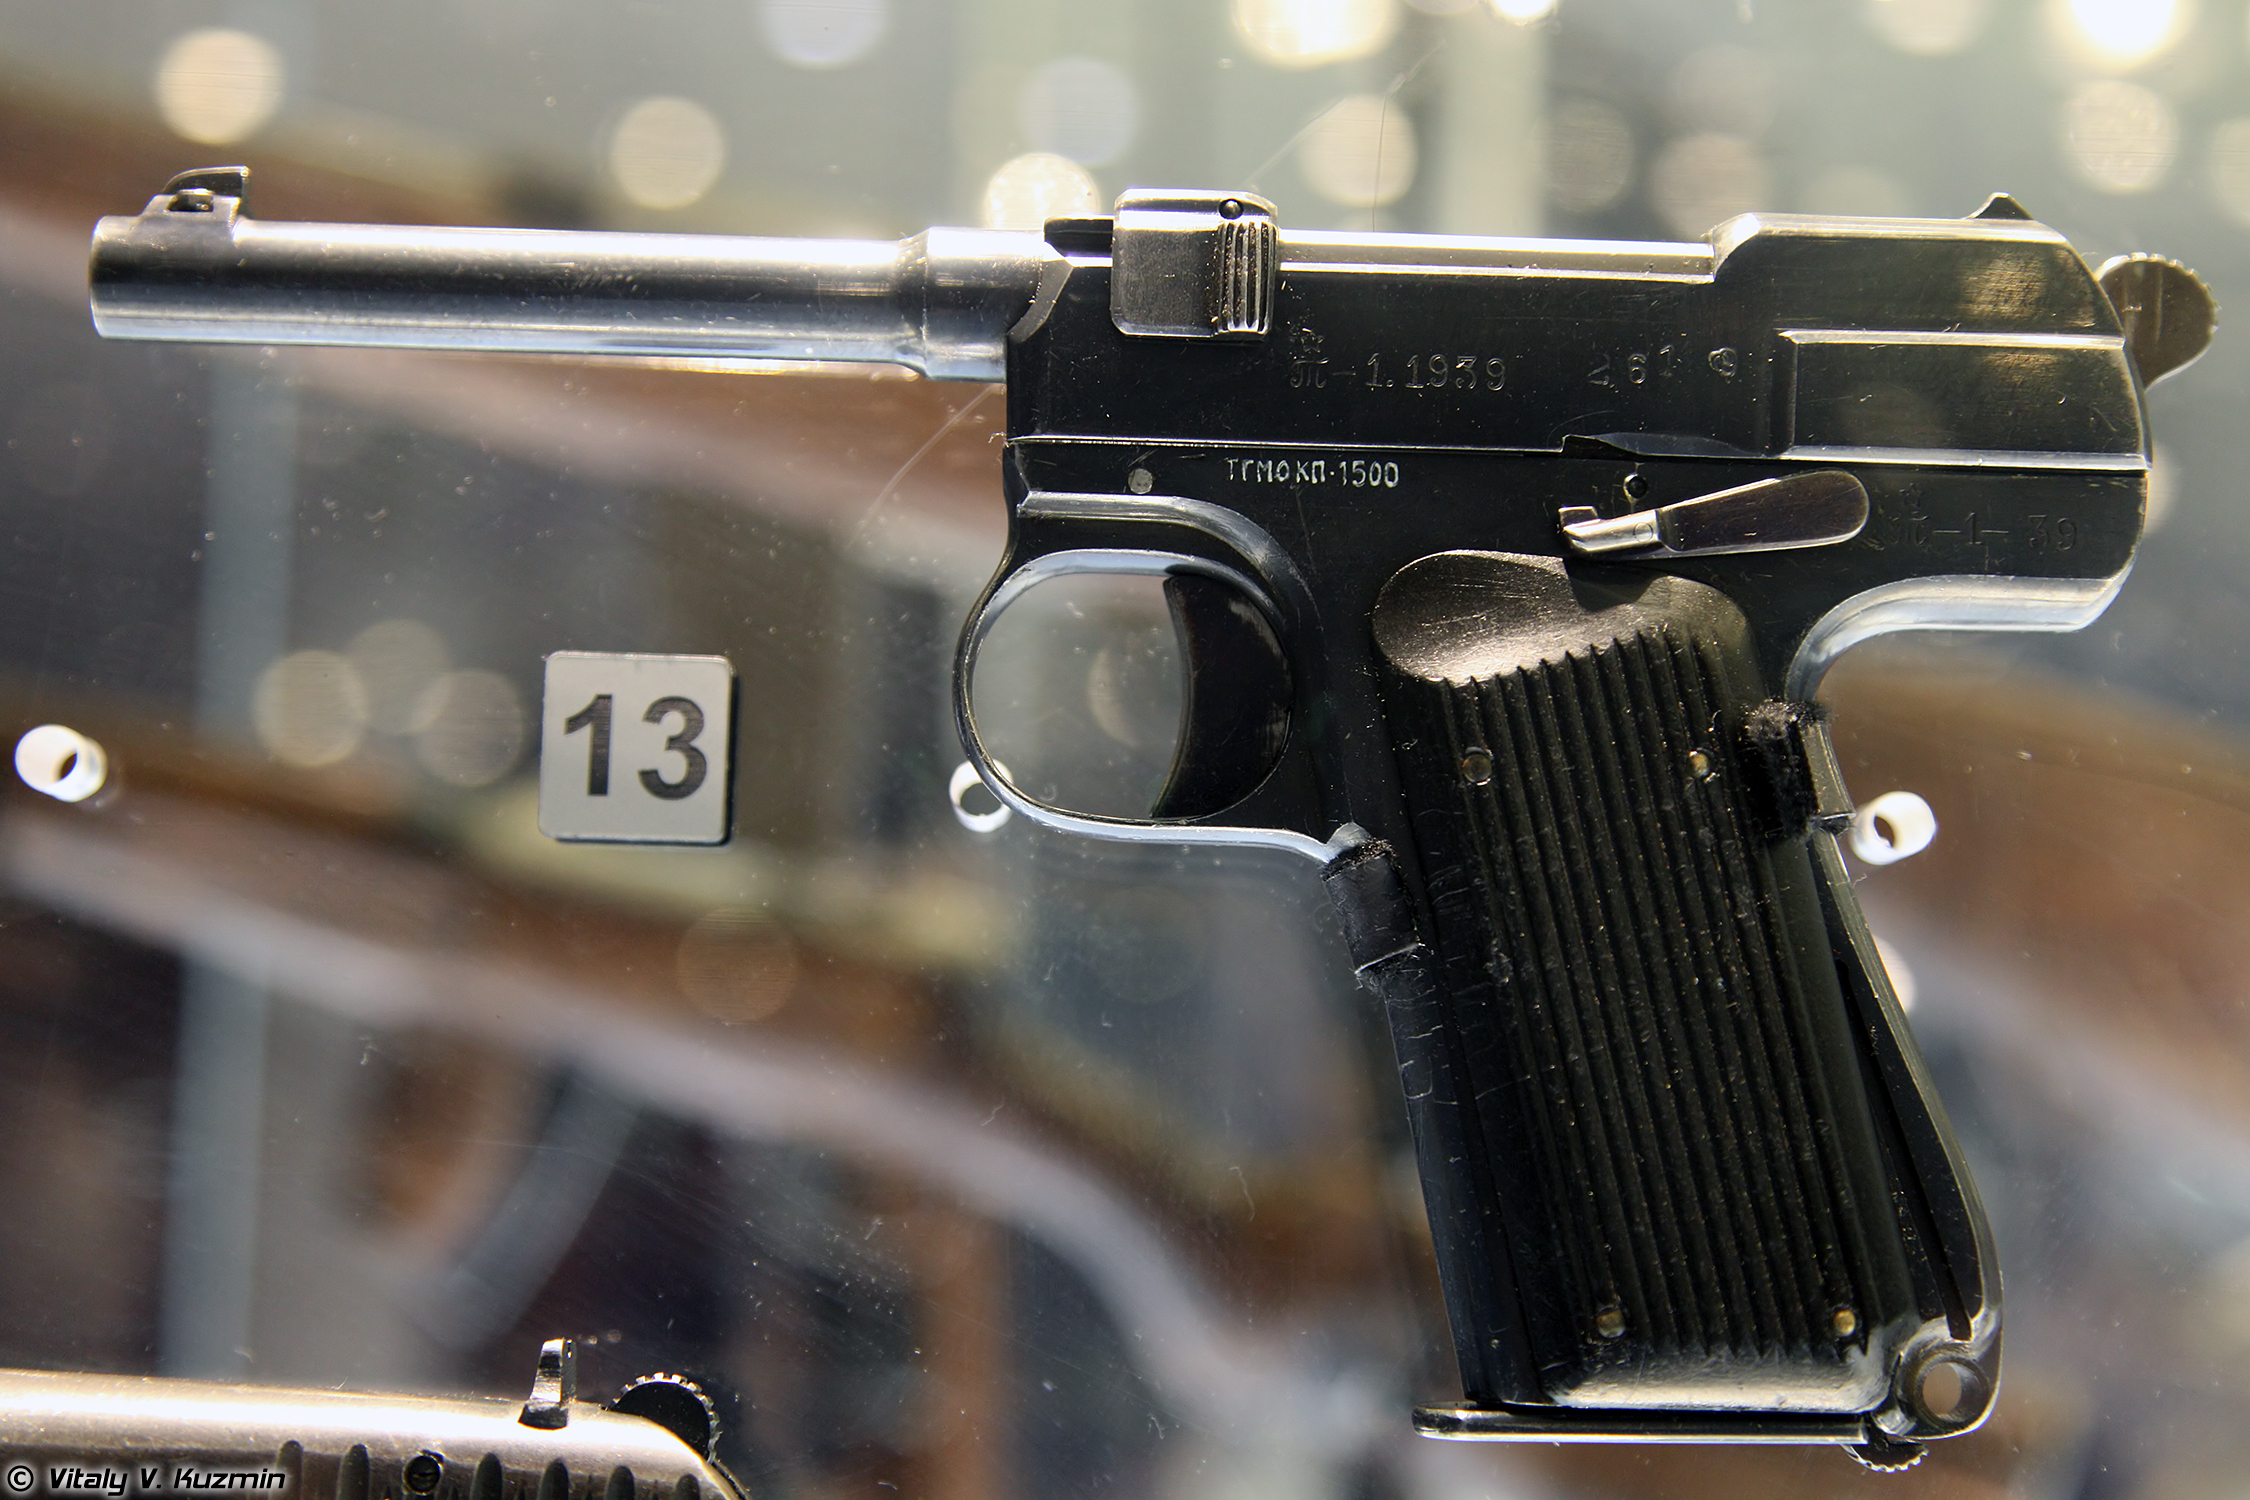 https://upload.wikimedia.org/wikipedia/commons/8/86/Tokarev_pistol_prototype_1939_in_Tula_State_Arms_Museum_-_2016_01.jpg